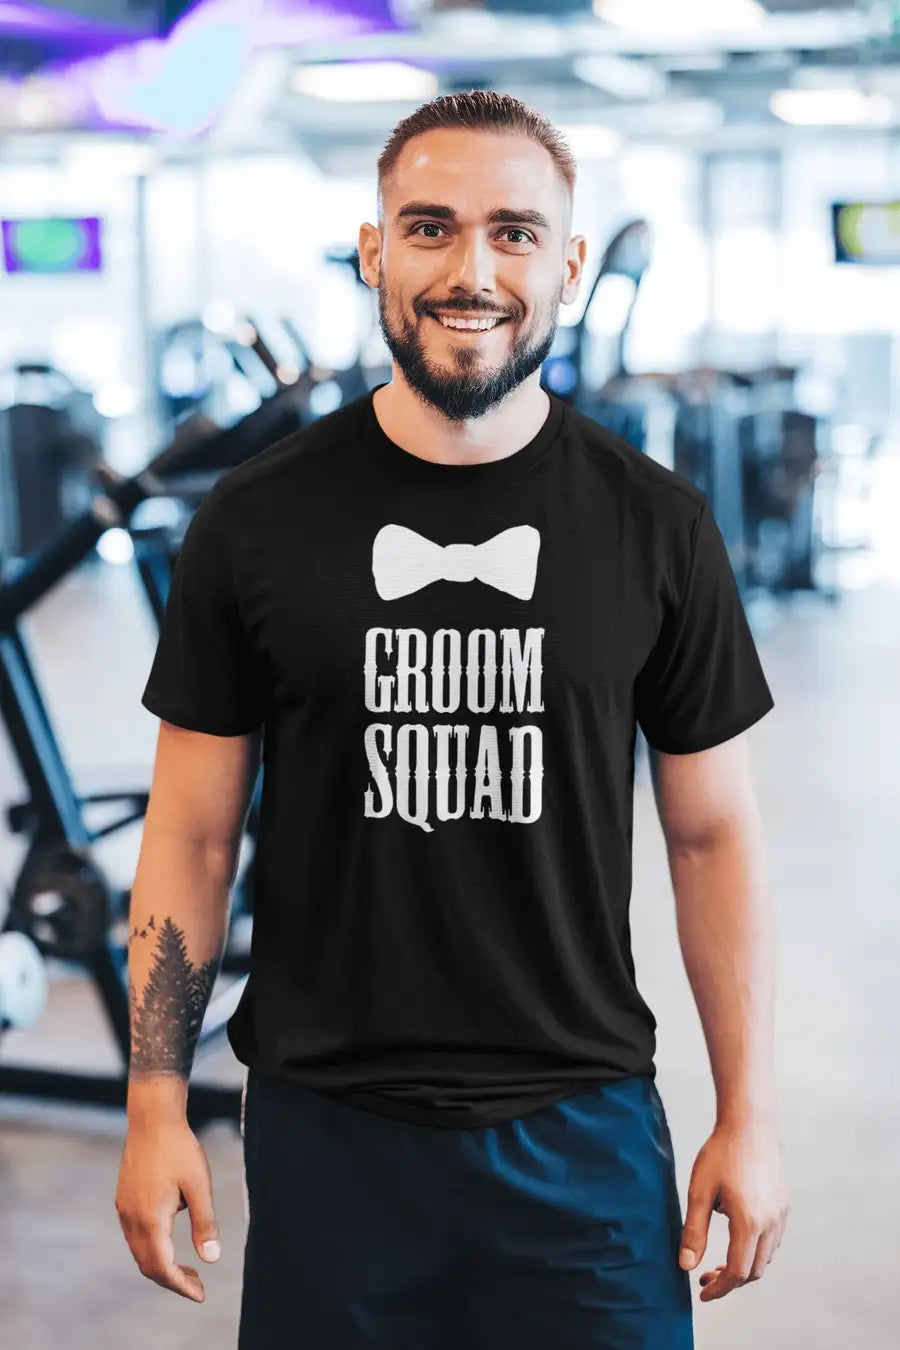 Groom Squad Exclusive T Shirt for Men | Premium Design | Catch My Drift India - Catch My Drift India Clothing black, clothing, groom, made in india, shirt, t shirt, tshirt, wedding